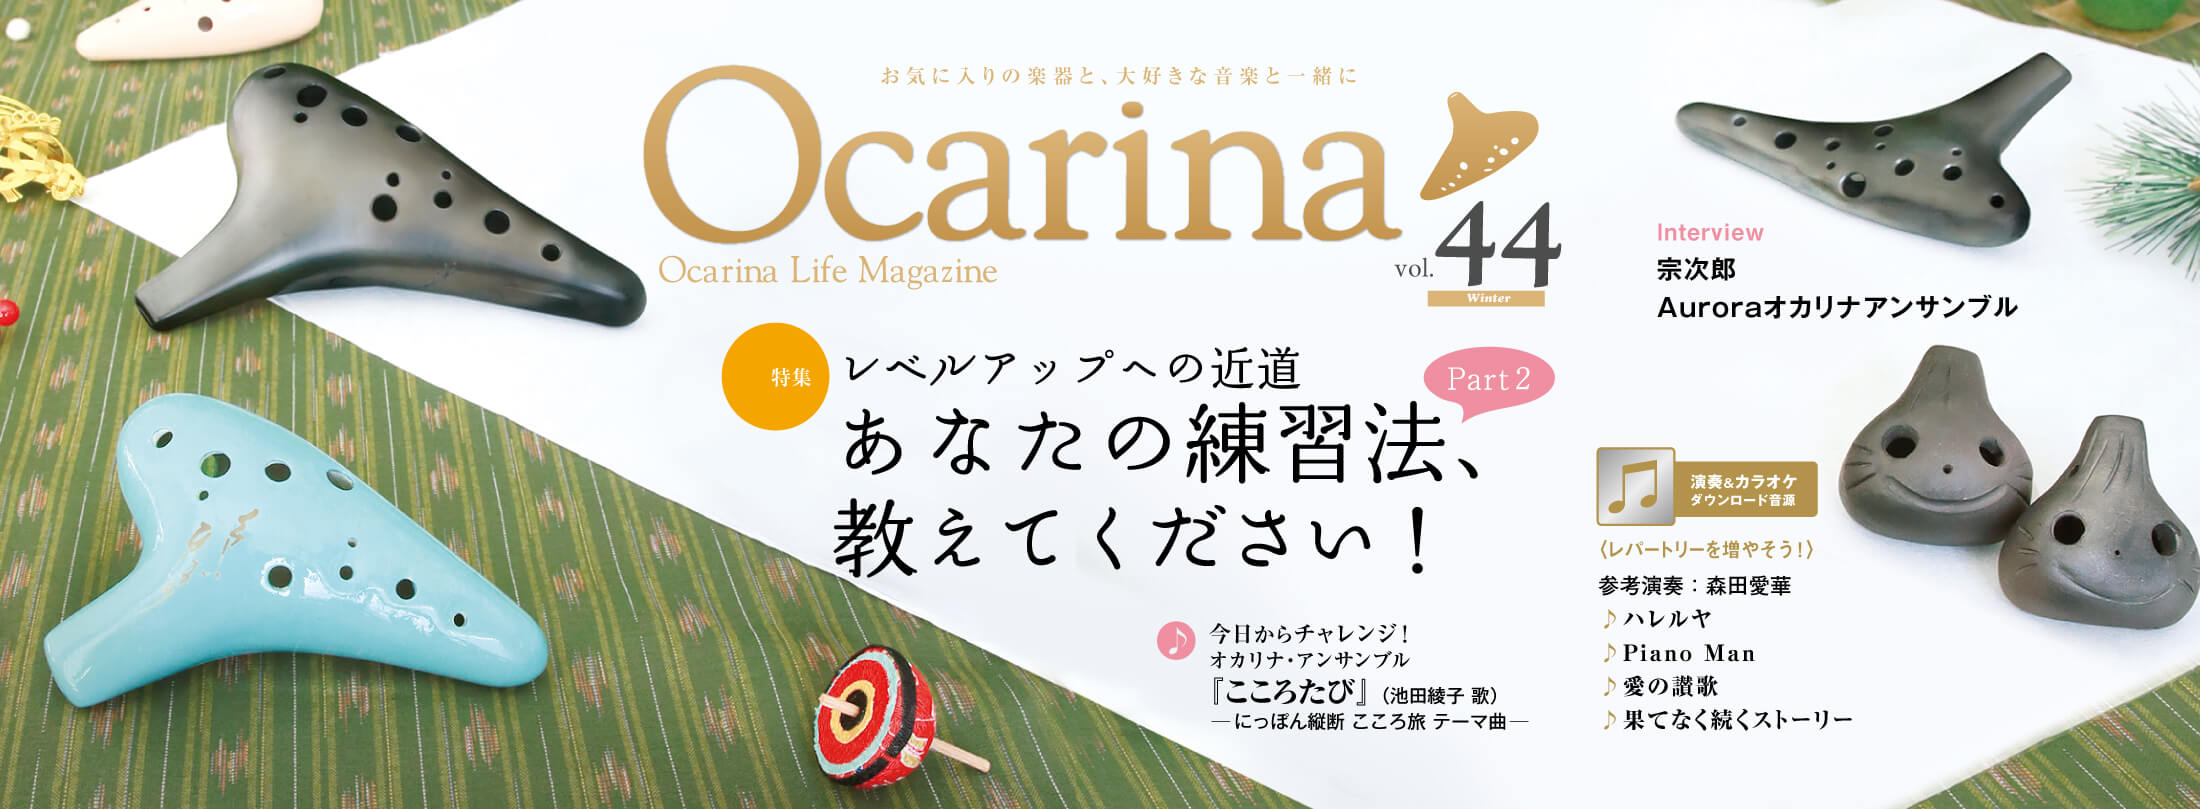 Ocarina 44号